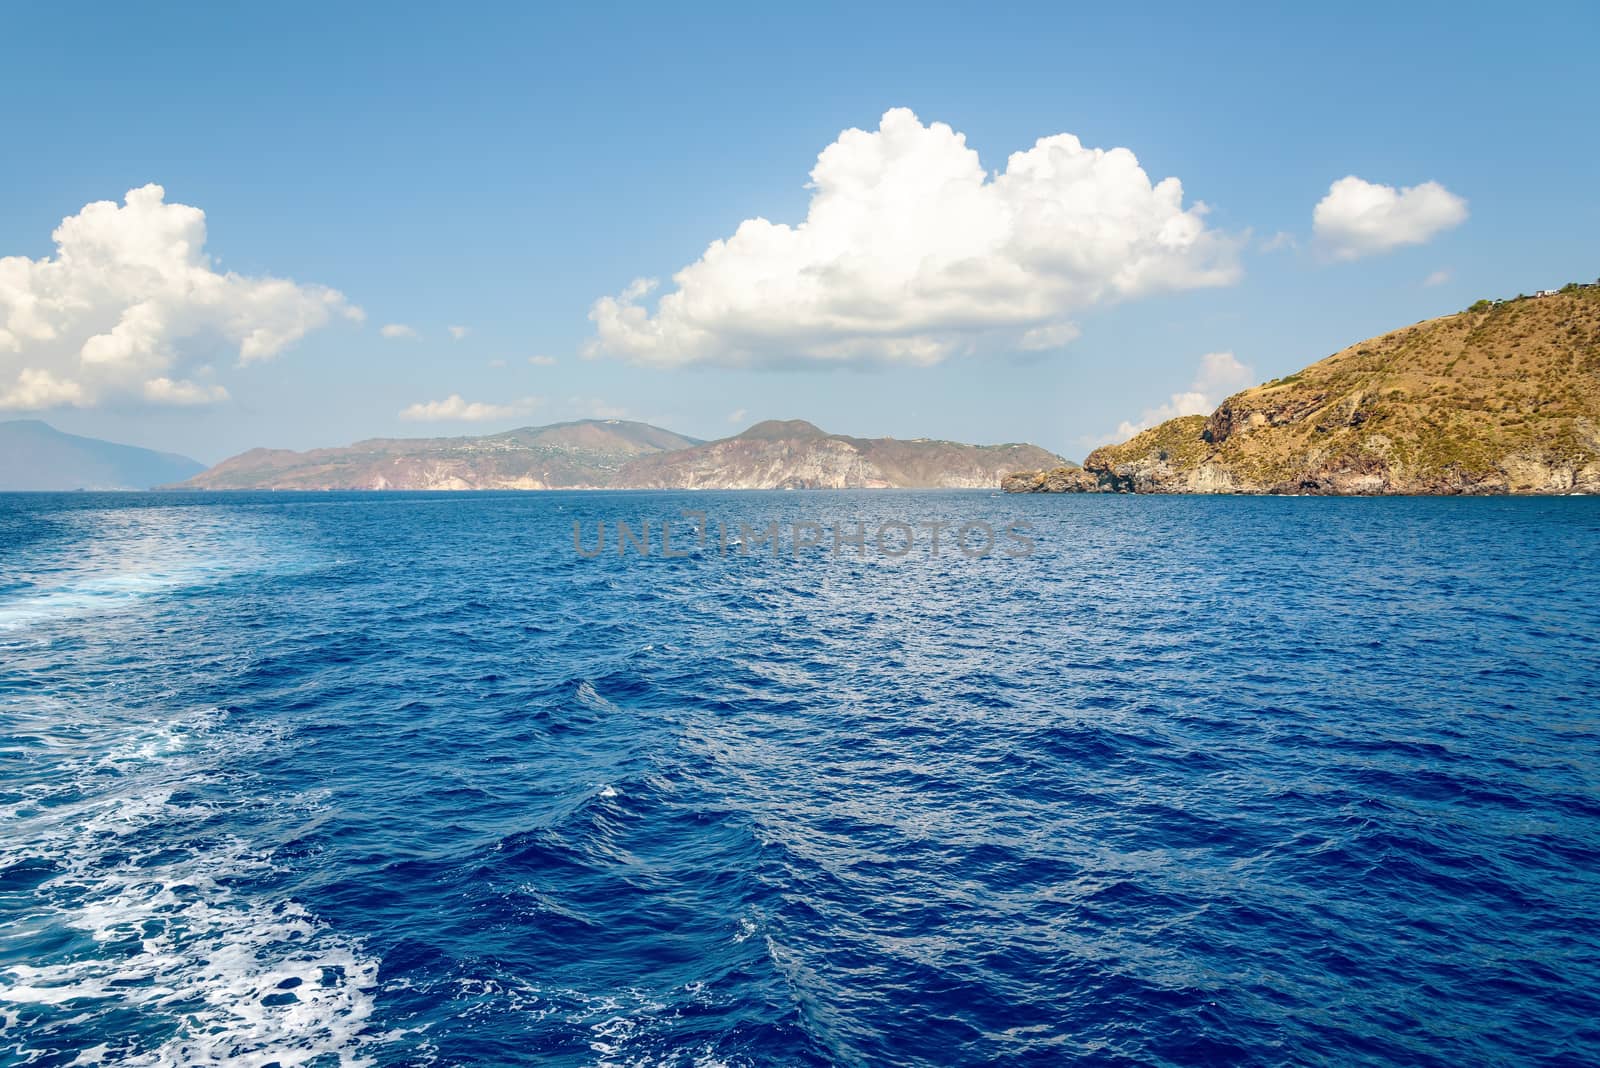 View of Aeolian Islands archipelago by mkos83